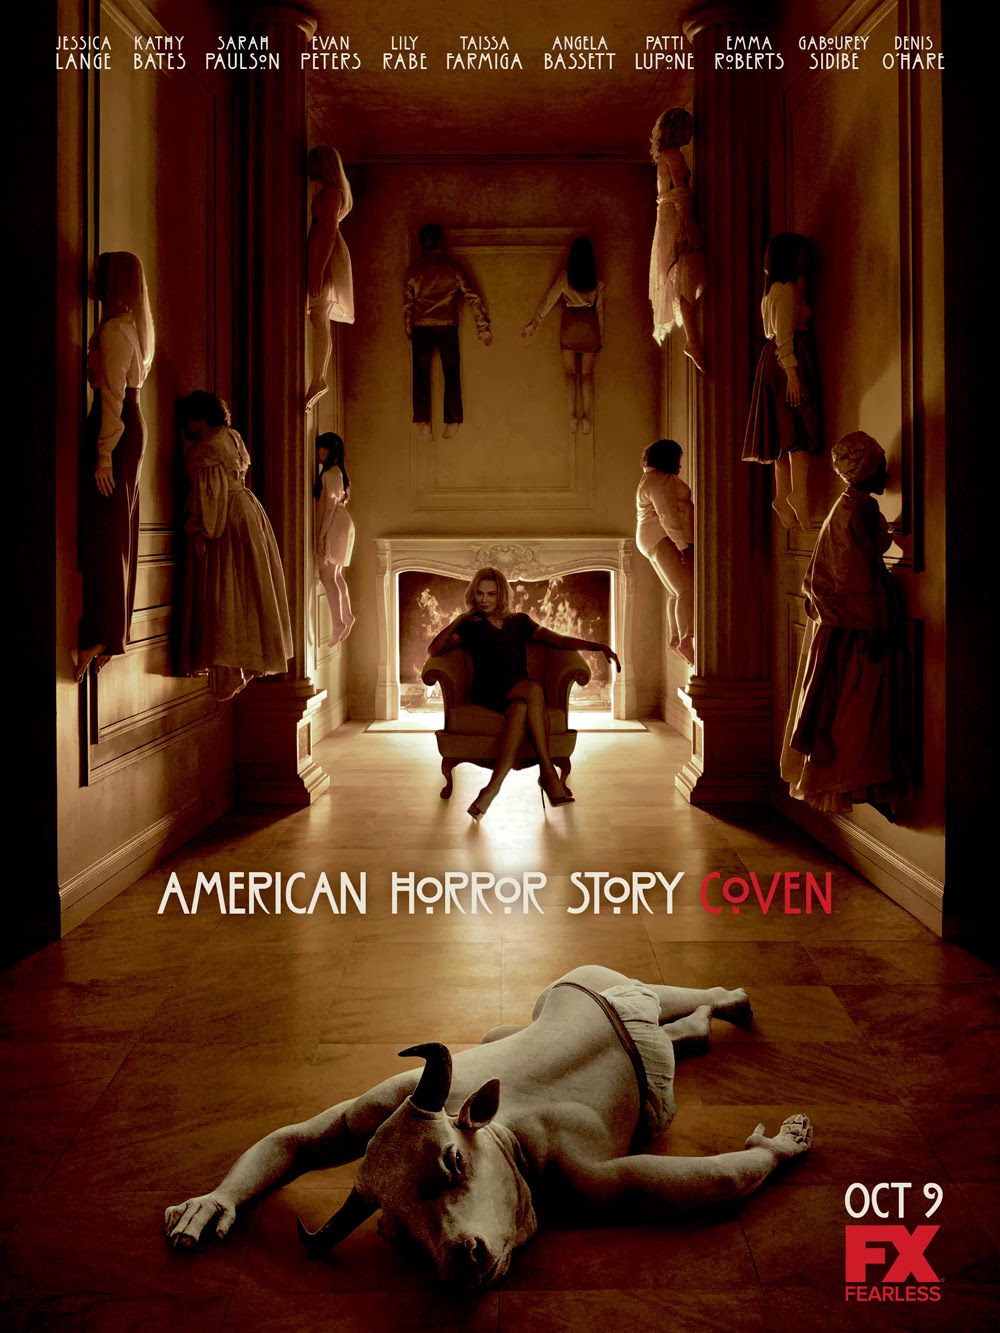 http://3.bp.blogspot.com/-Af9Lu312hjM/UmkdPIuR7UI/AAAAAAAAAXQ/efmT33m5FNg/s1600/american-horror-story-coven-poster2.jpg